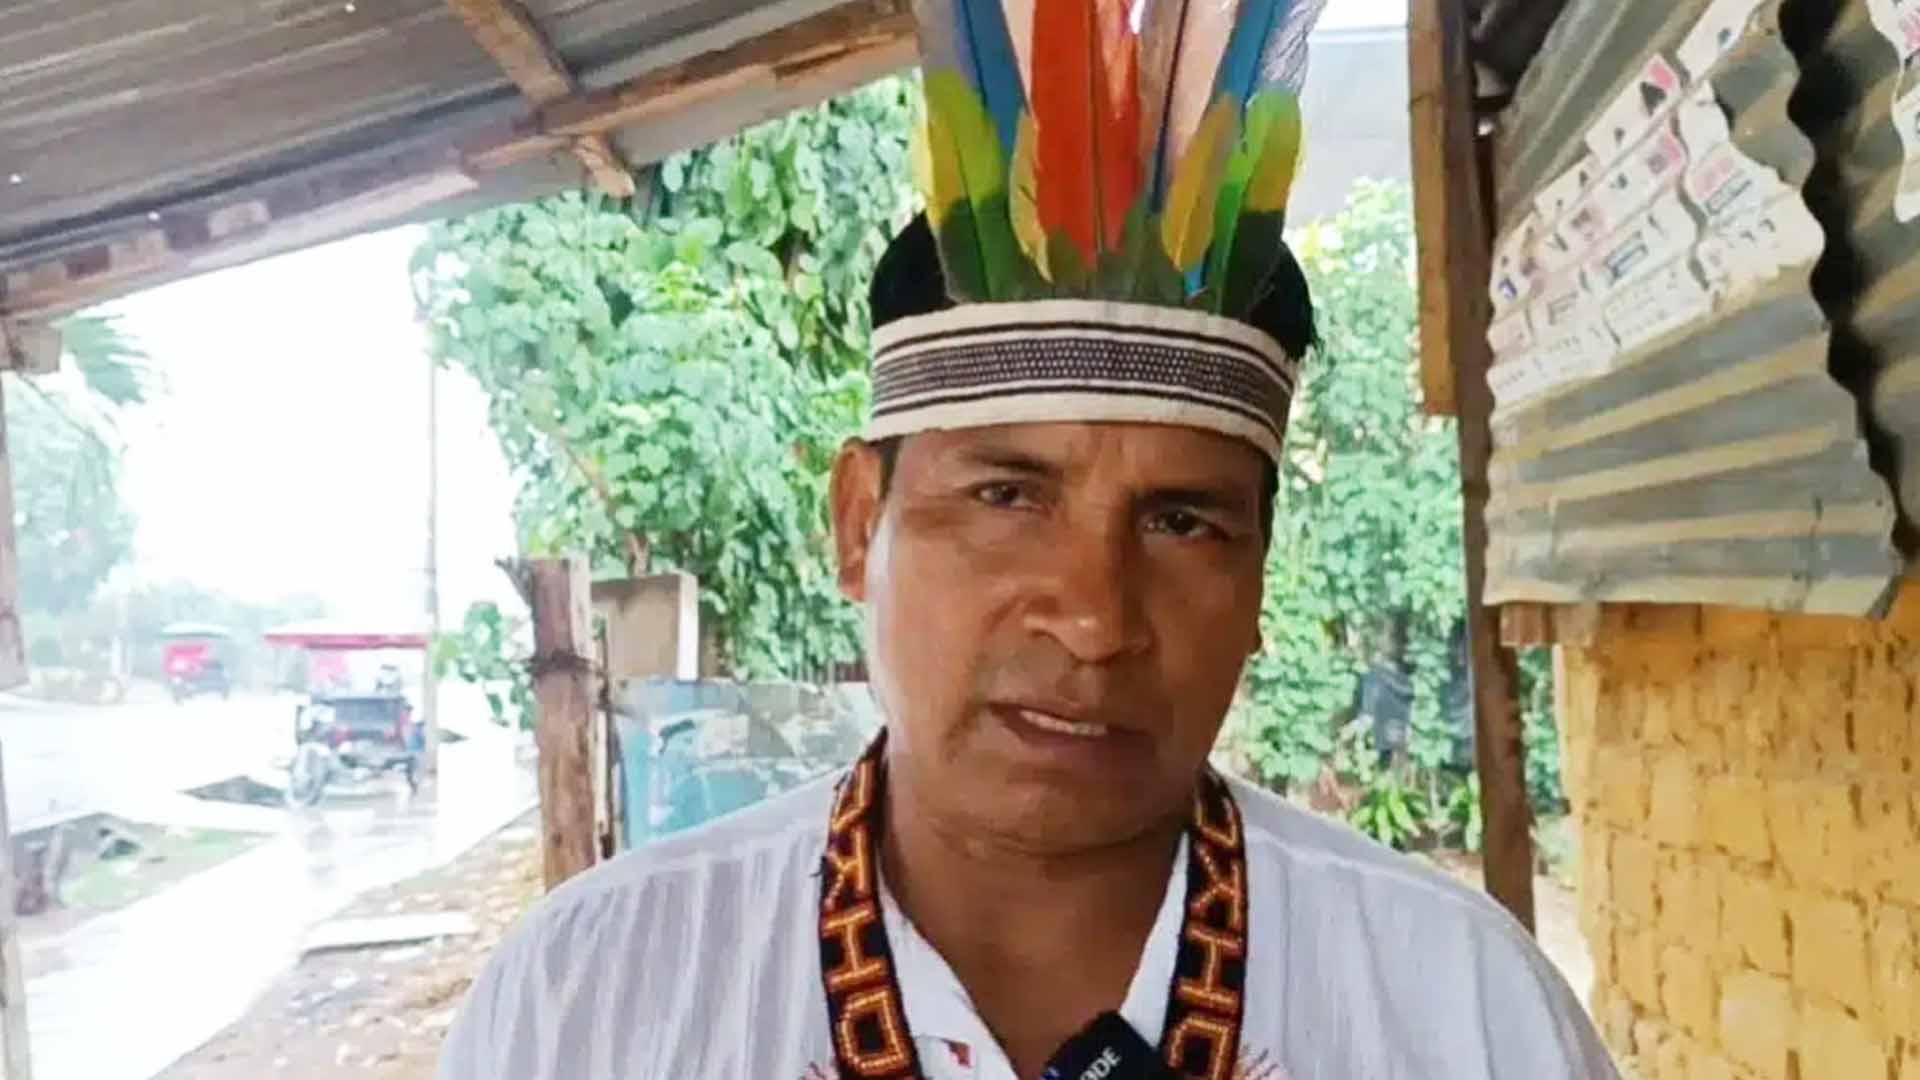 Quinto Inuma Alvarado, lider kichwa